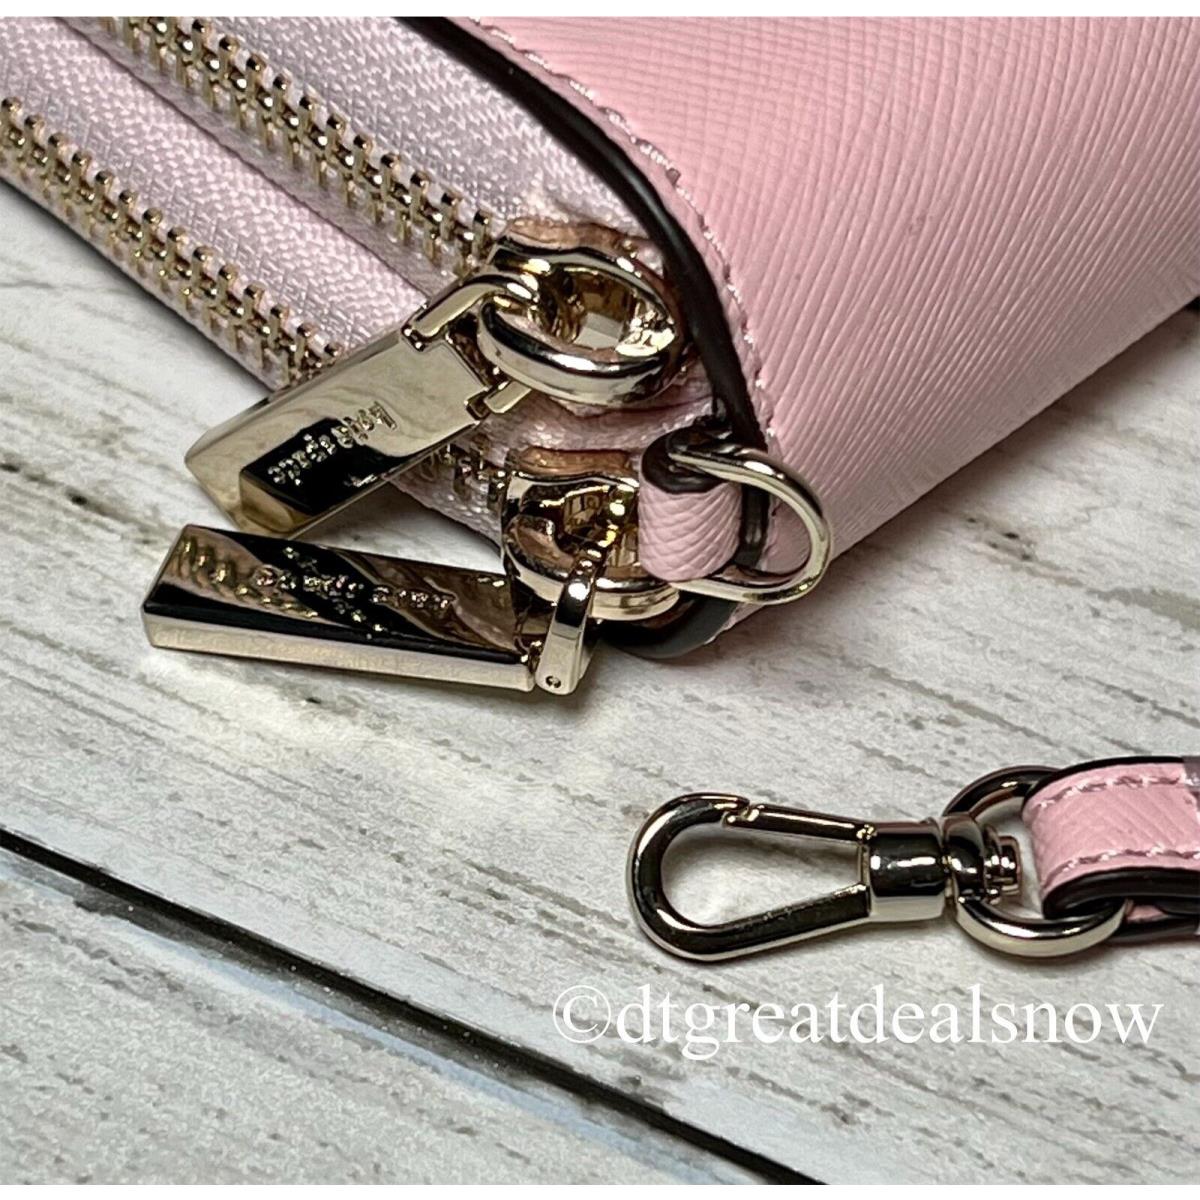 Kate Spade wallet  - Chalk Pink